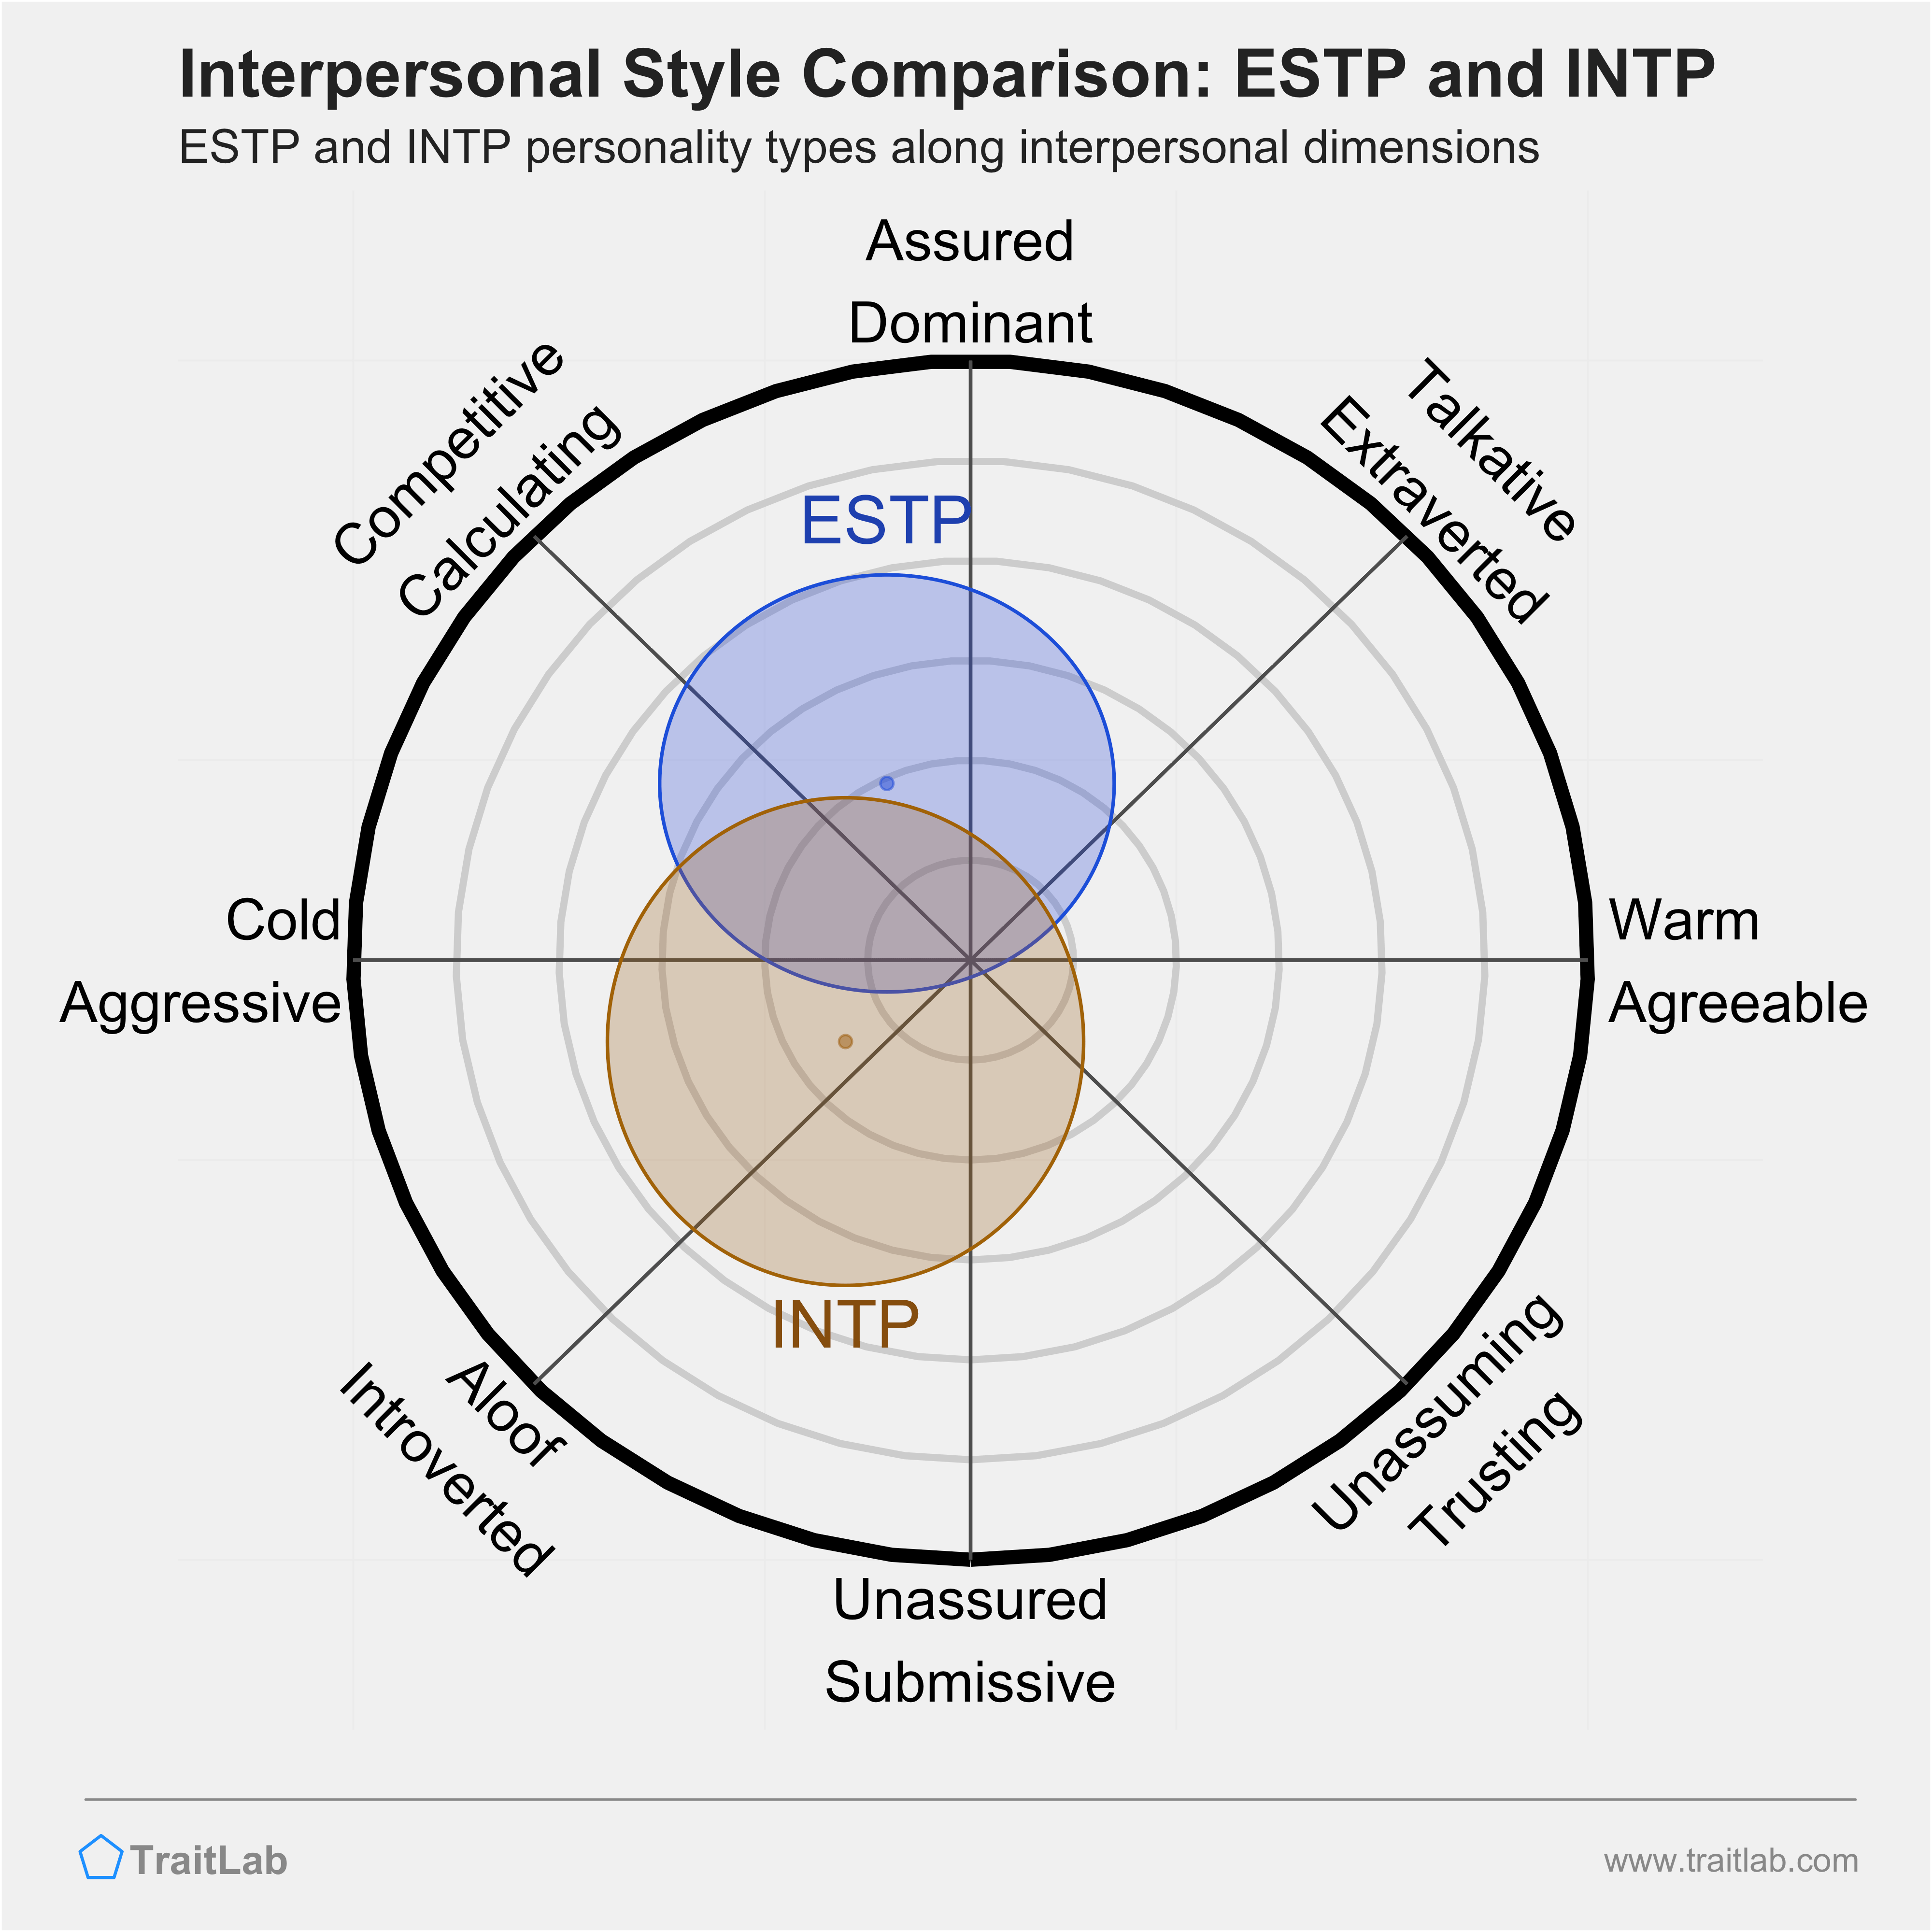 ESTP and INTP comparison across interpersonal dimensions